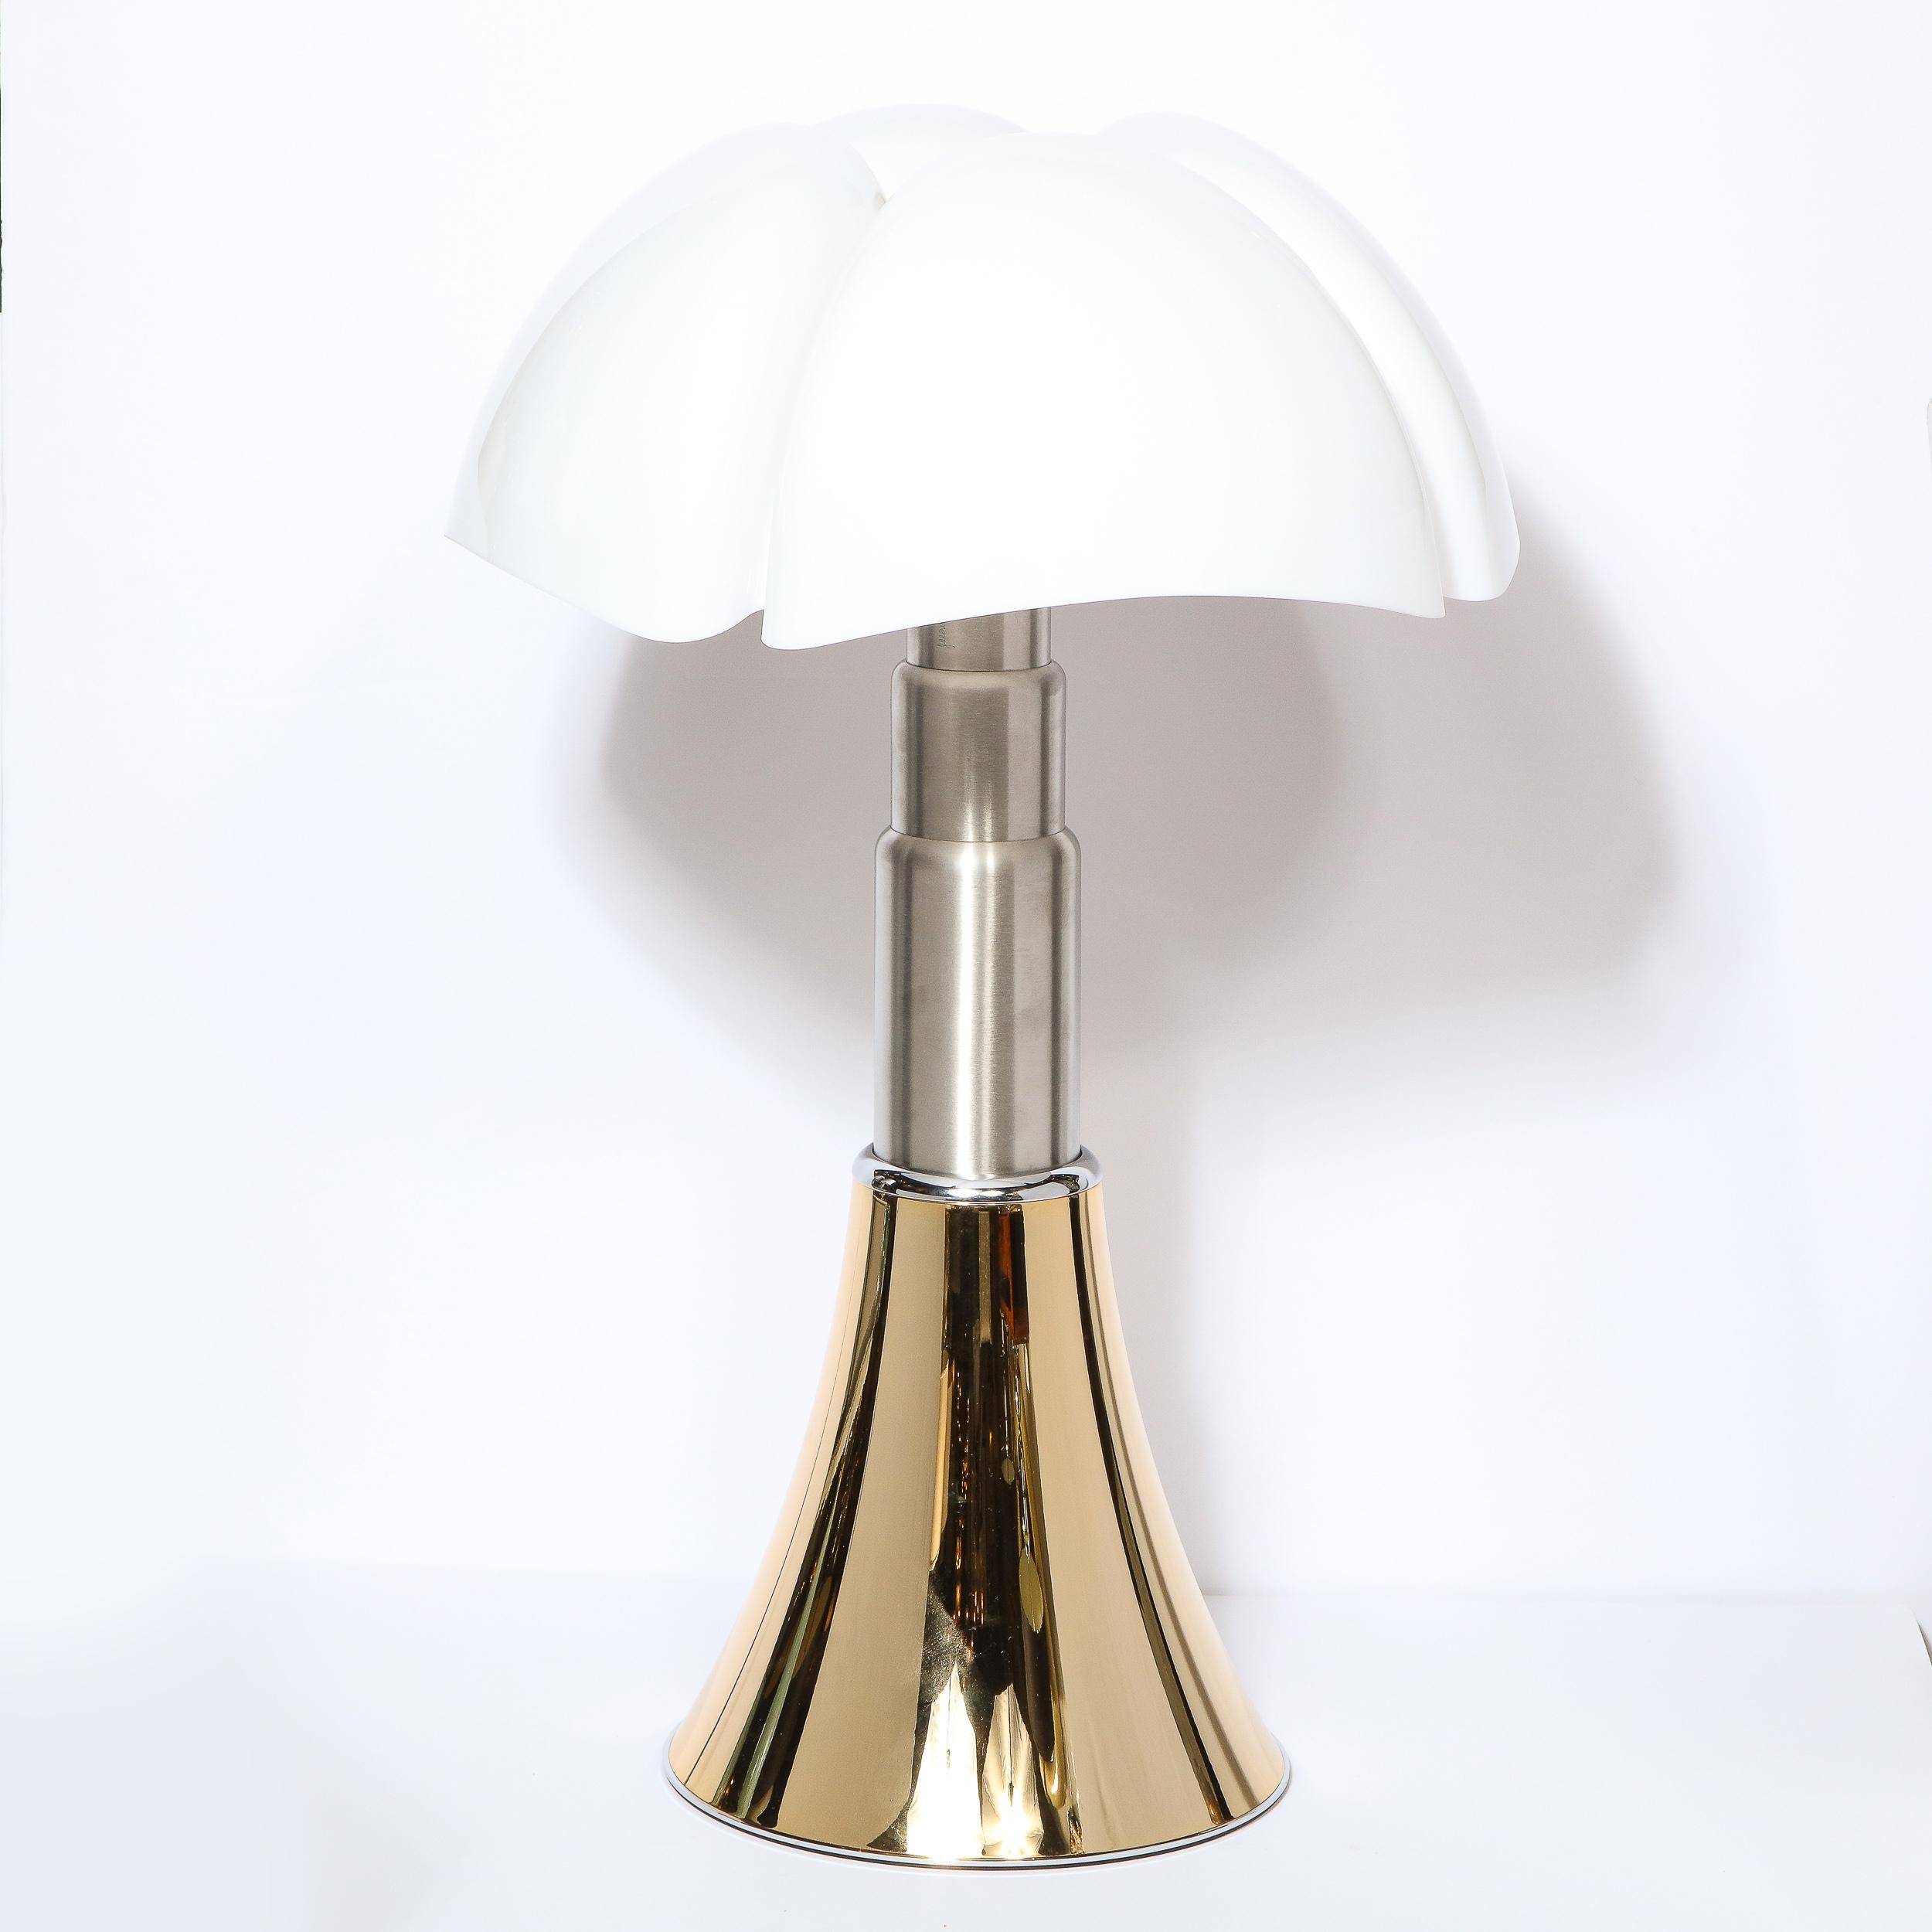 Aluminum Modernist Pipistrello Brass & Lucite Lamp by Gae Aulenti for Martinelli Luce